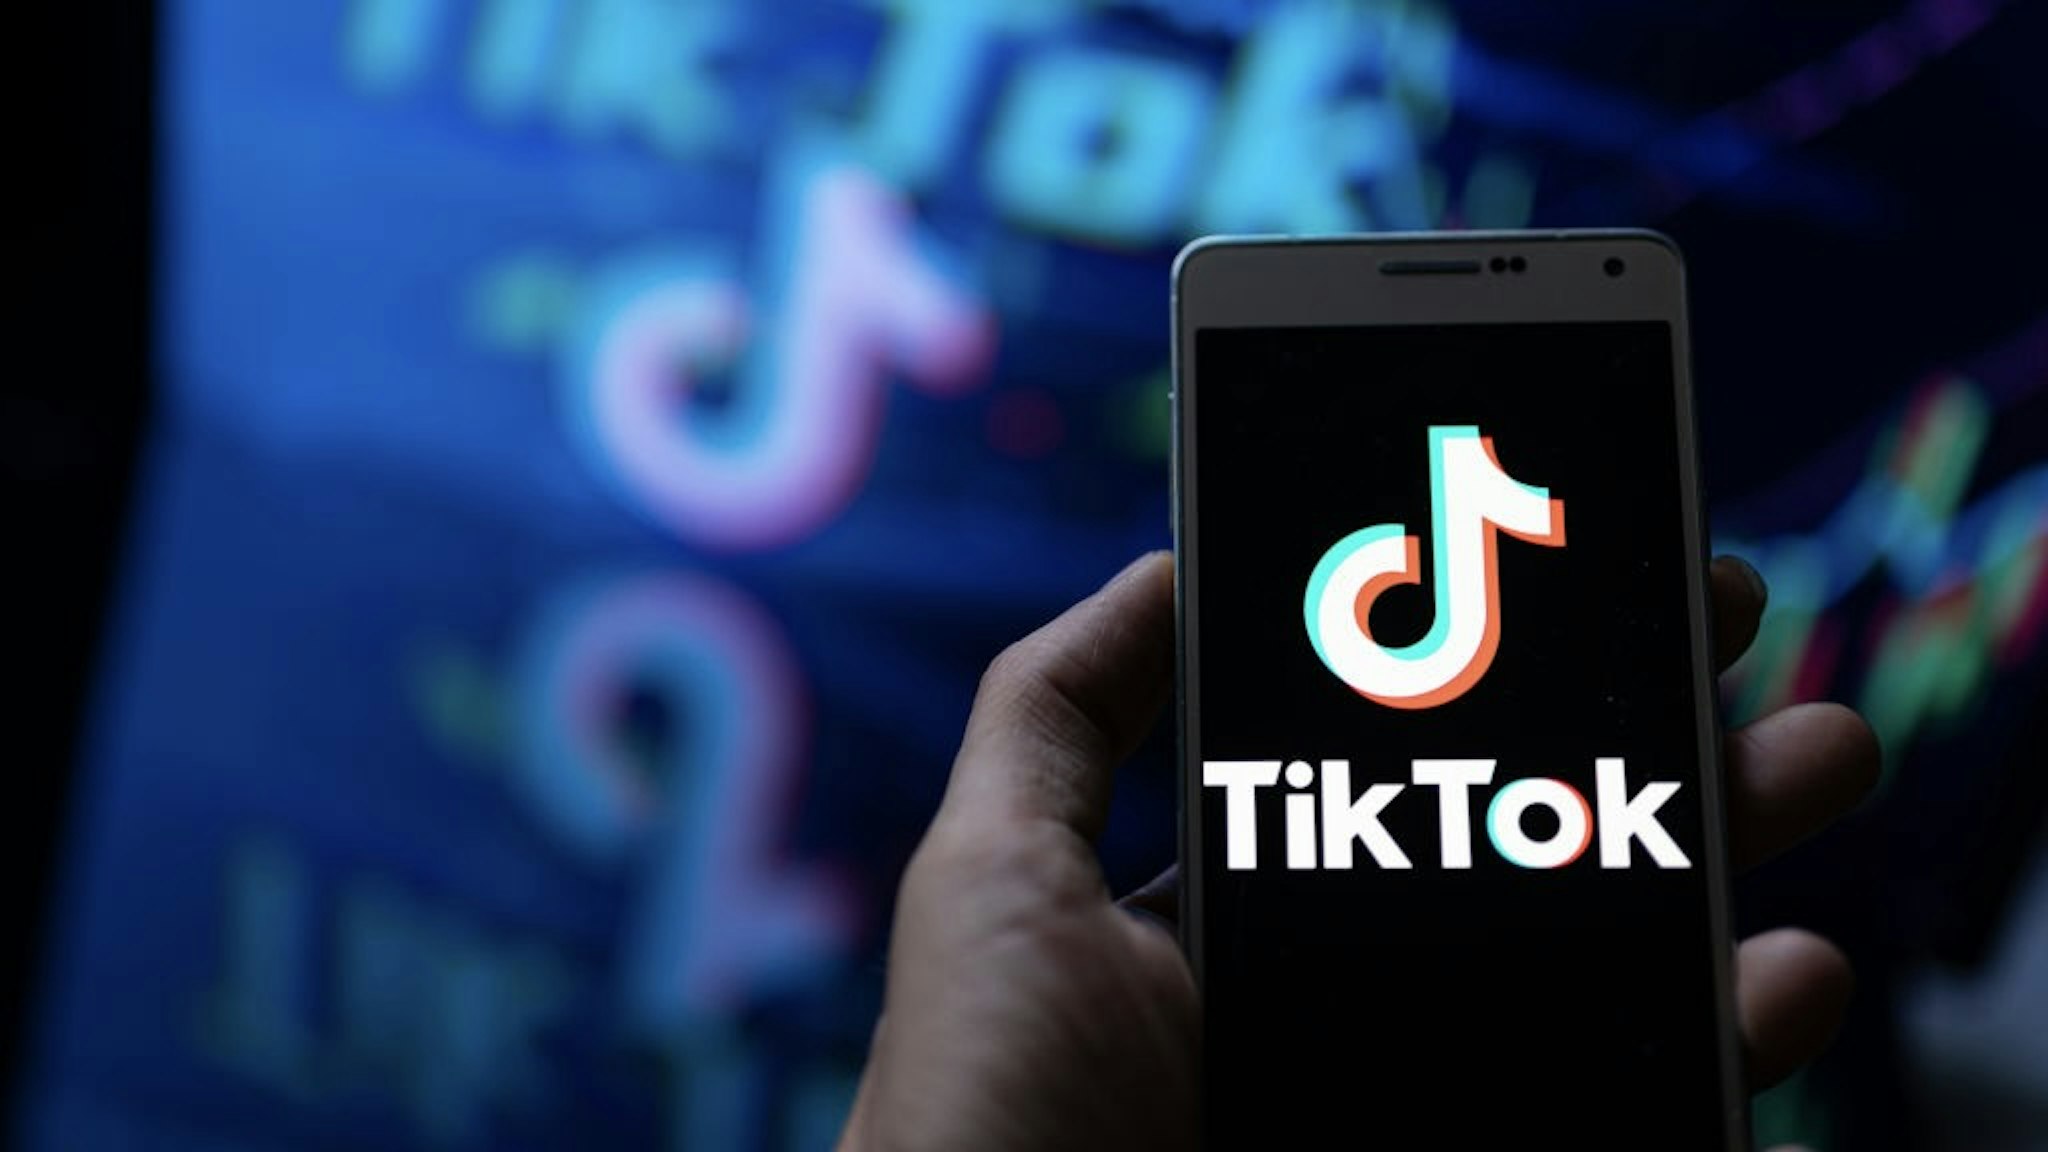 Illustration TikTok Logo Photo illustration a TikTok logo seen displayed on a smartphone In Brussels - Belgium on 18 September 2022. (Photo illustration by Jonathan Raa/NurPhoto via Getty Images) NurPhoto / Contributor